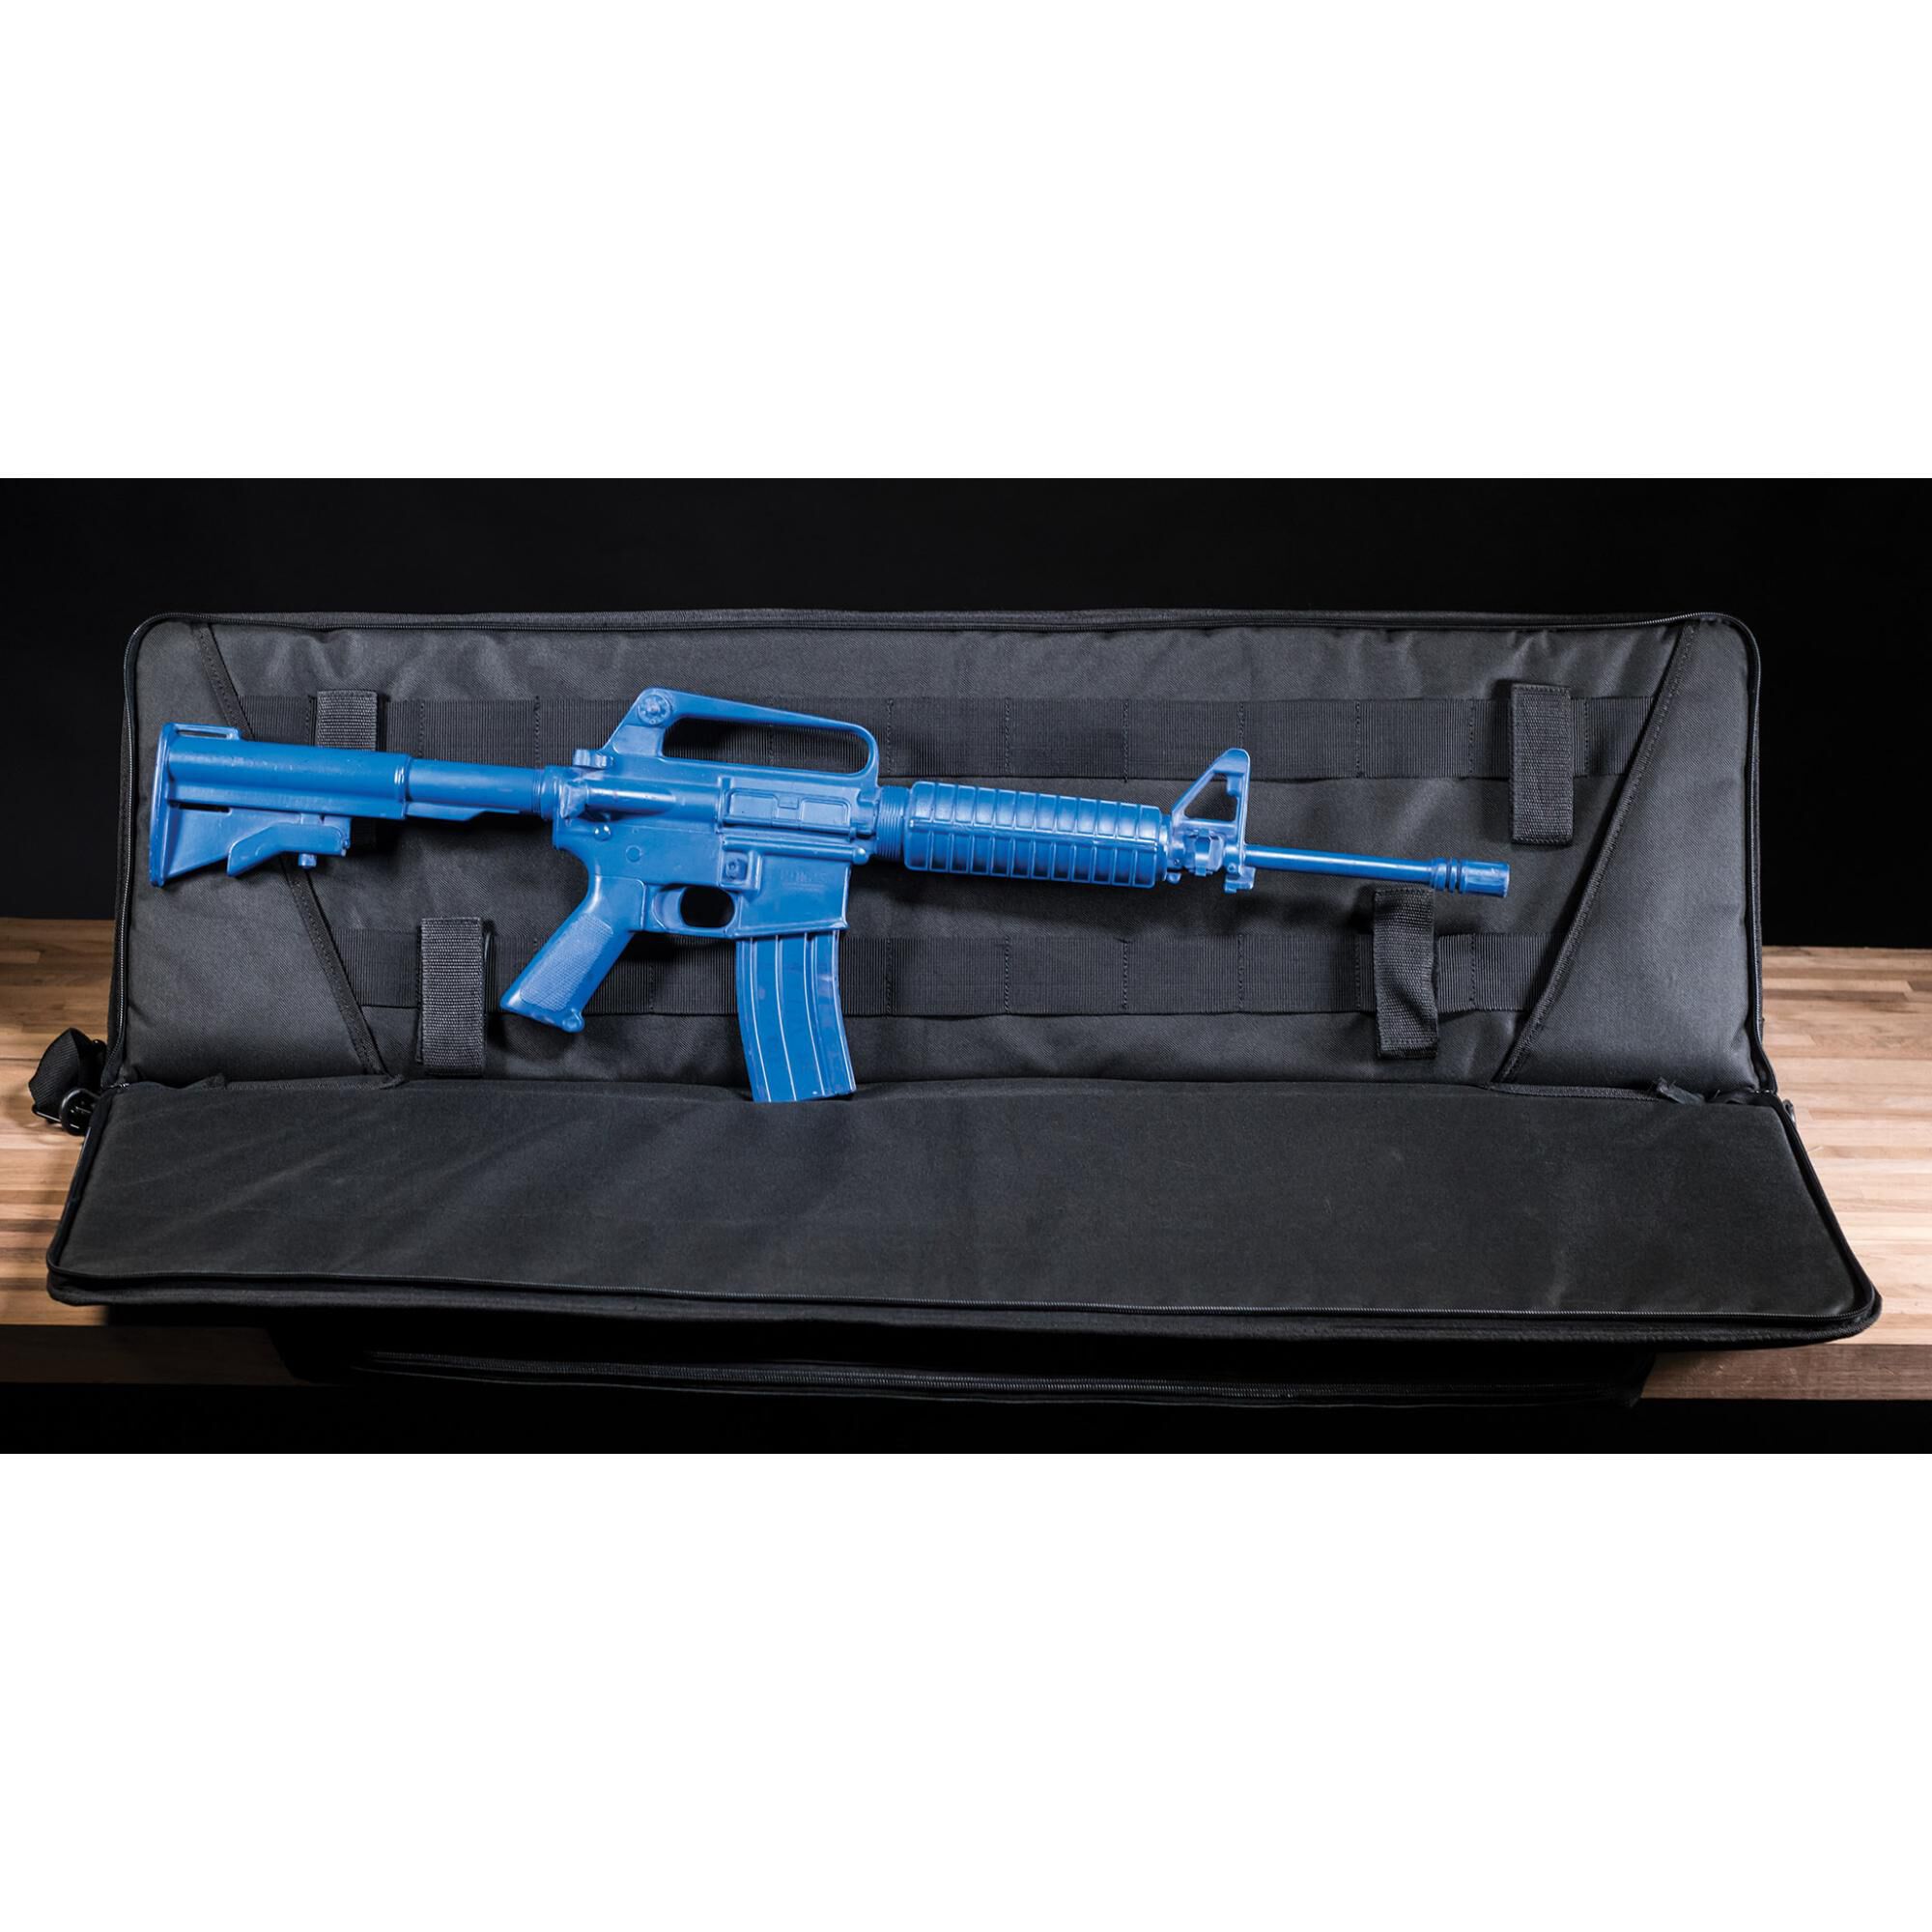 Glock CZ M&P Waterproof Hard Carrying Gun Case Military Grade IP68 Shockproof